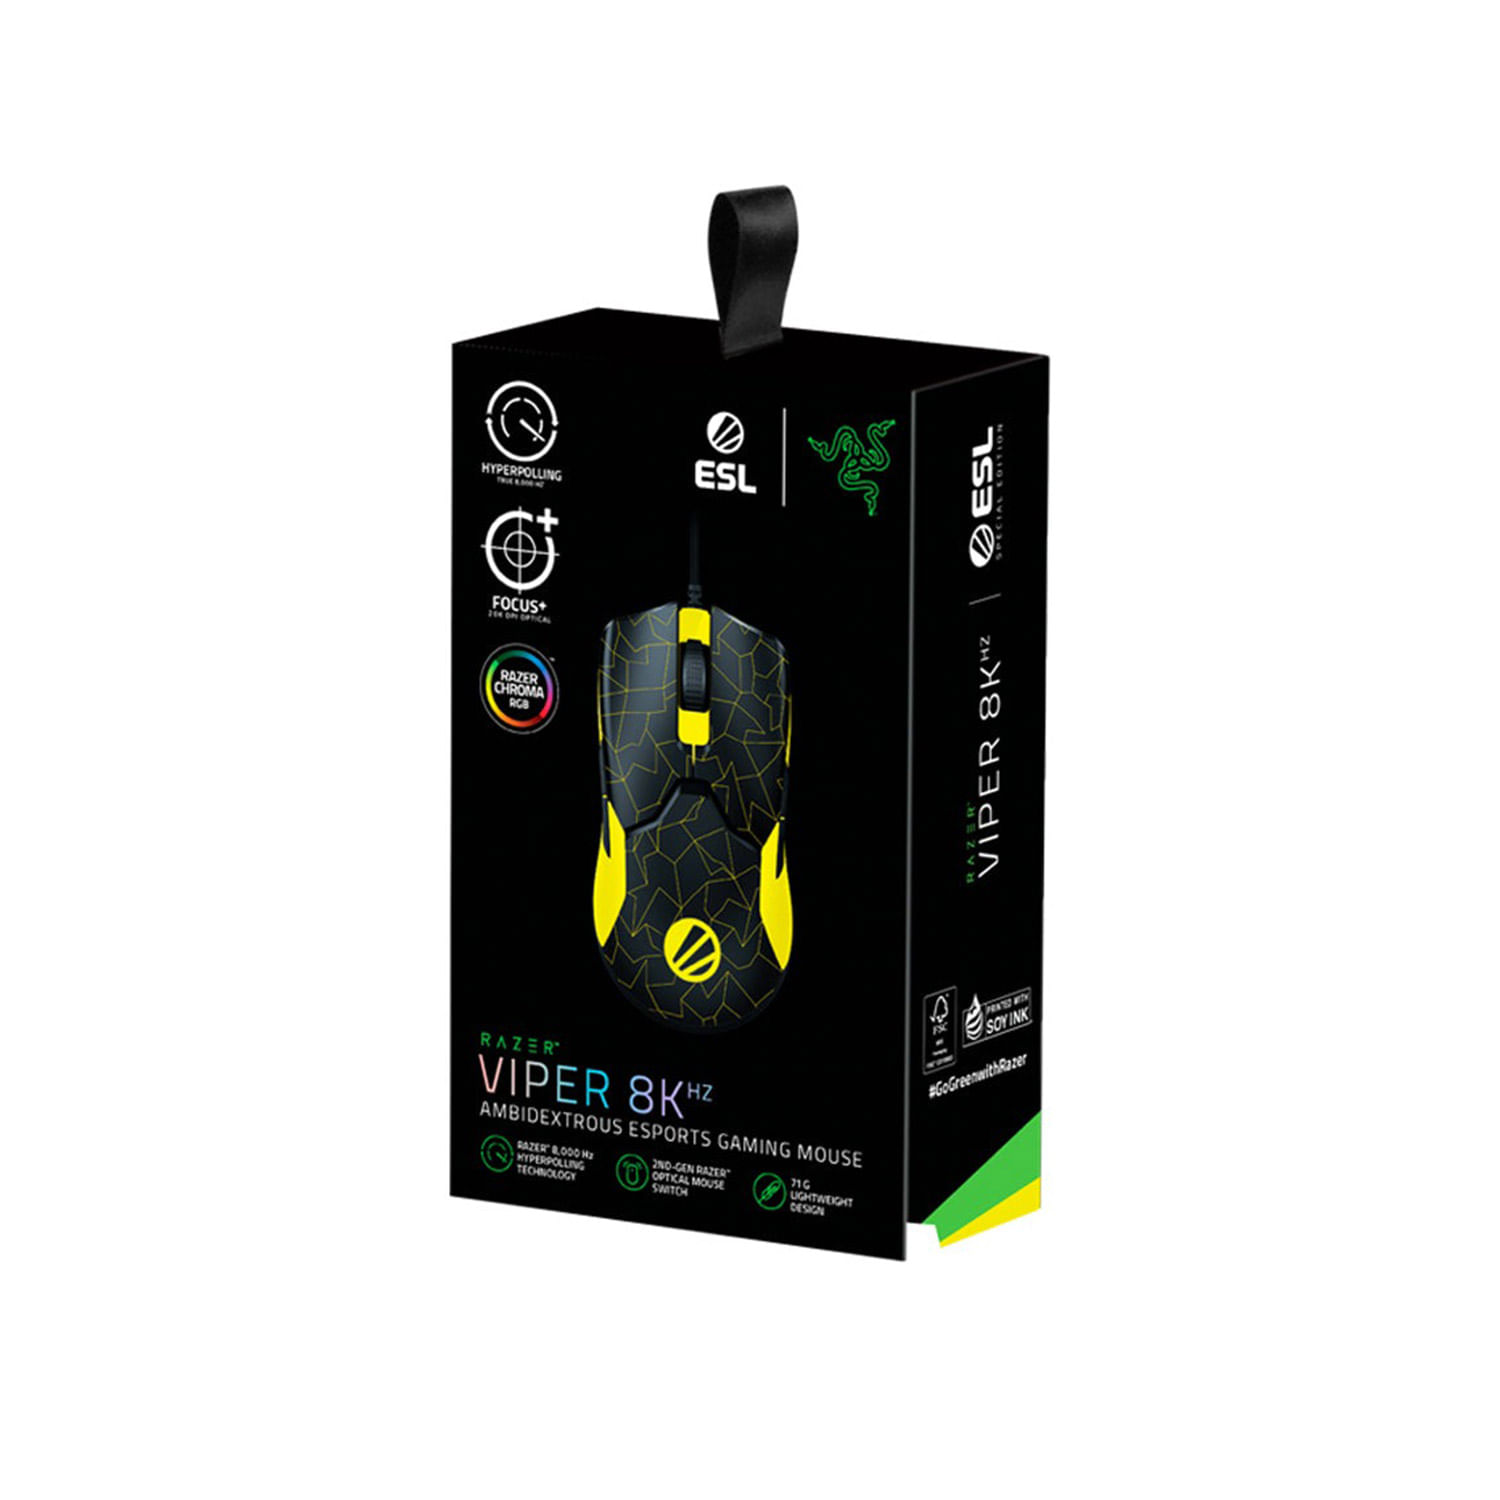 Mouse Razer Gamer Viper 8Khz Esl Ed Focus+Optical Switch Ambidextrous Black